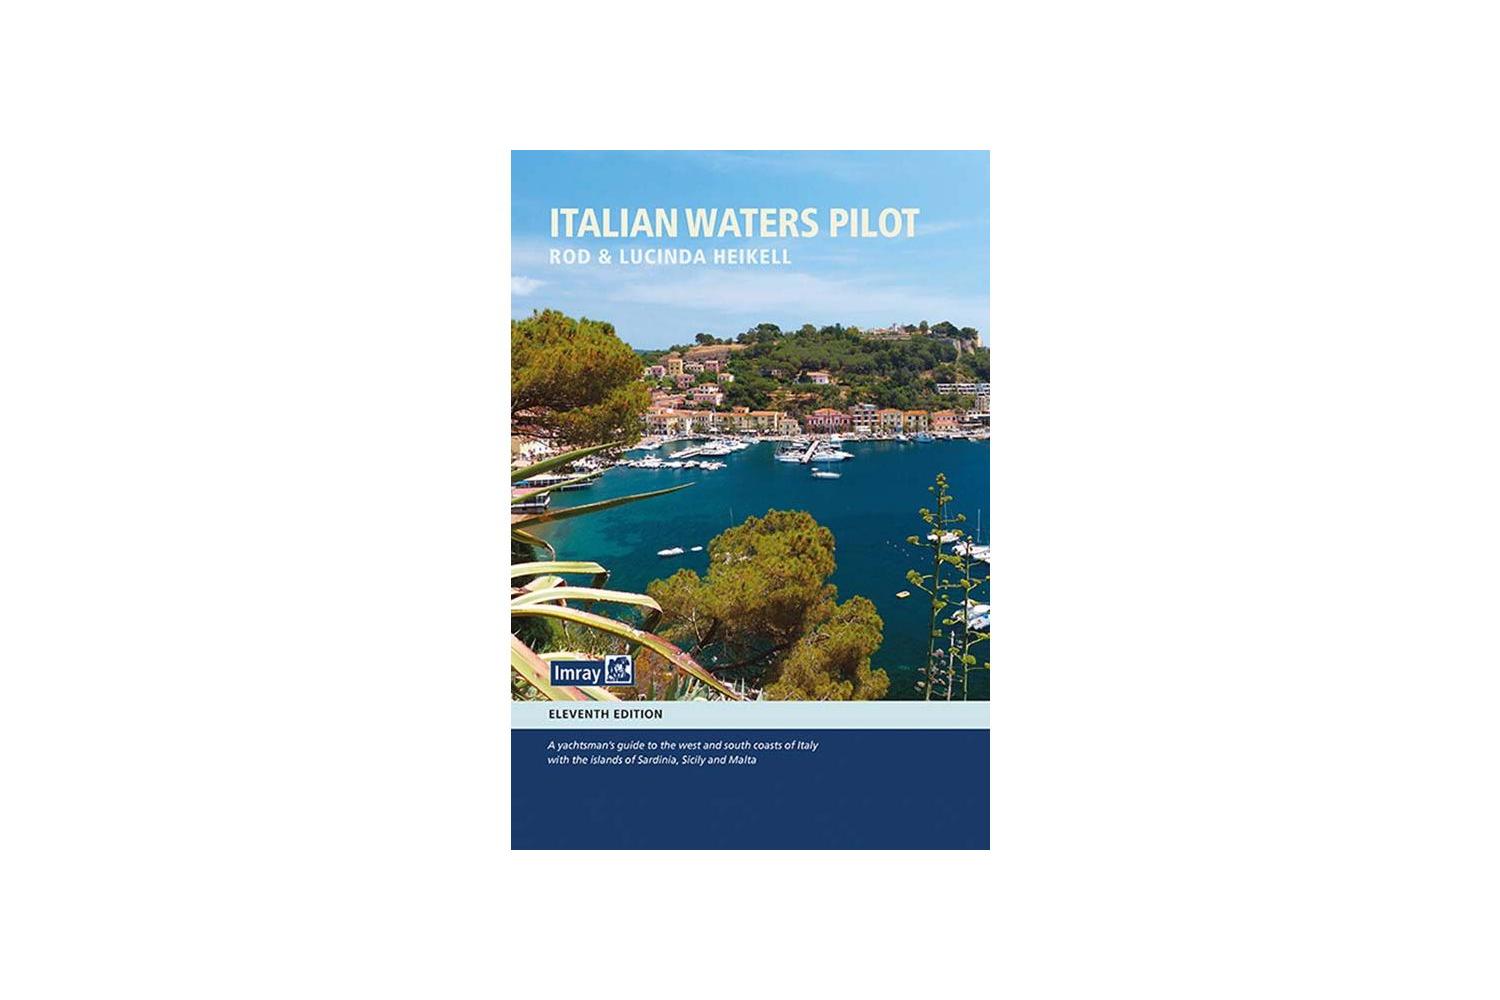 Imray pilot - Italian waters - Rod & Lucinda Heikell